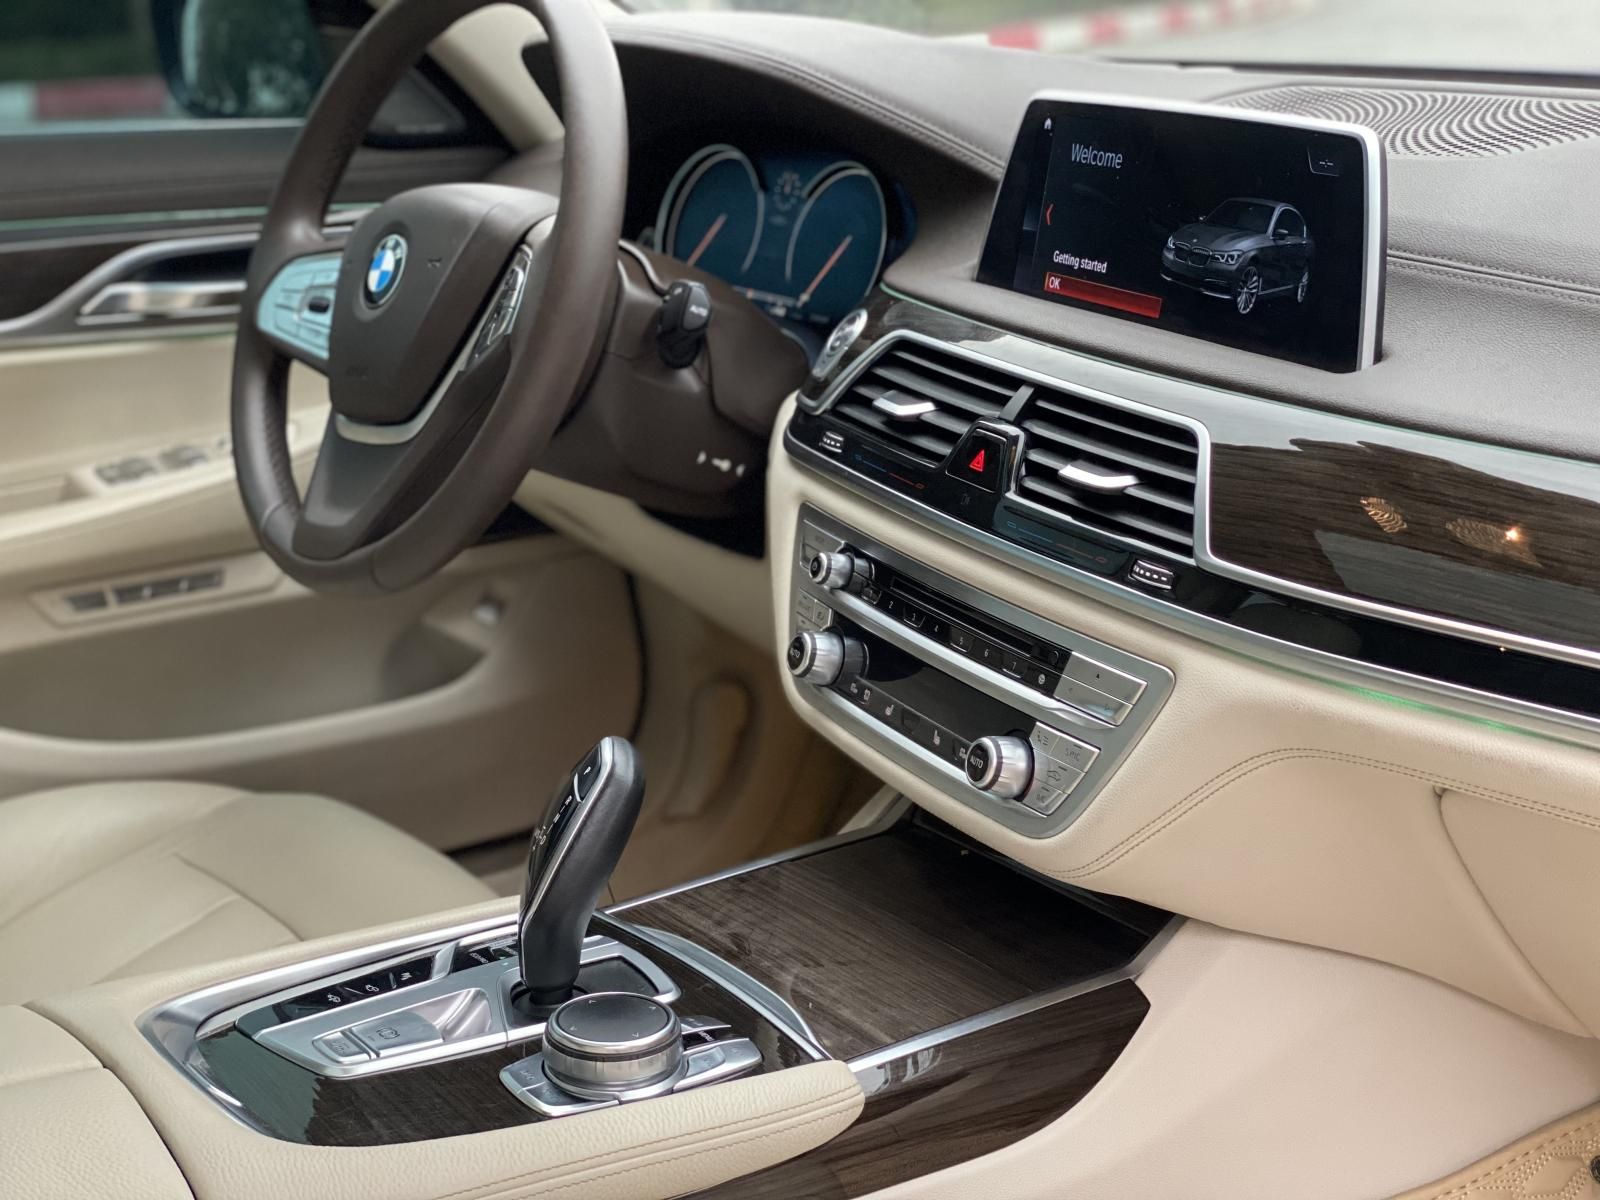 BMW 730Li 2015 - BMW 730Li màu đen nội thất kem sx 2015 model 2016, xe nhập khẩu biển Hà Nội 1 chủ từ đầu